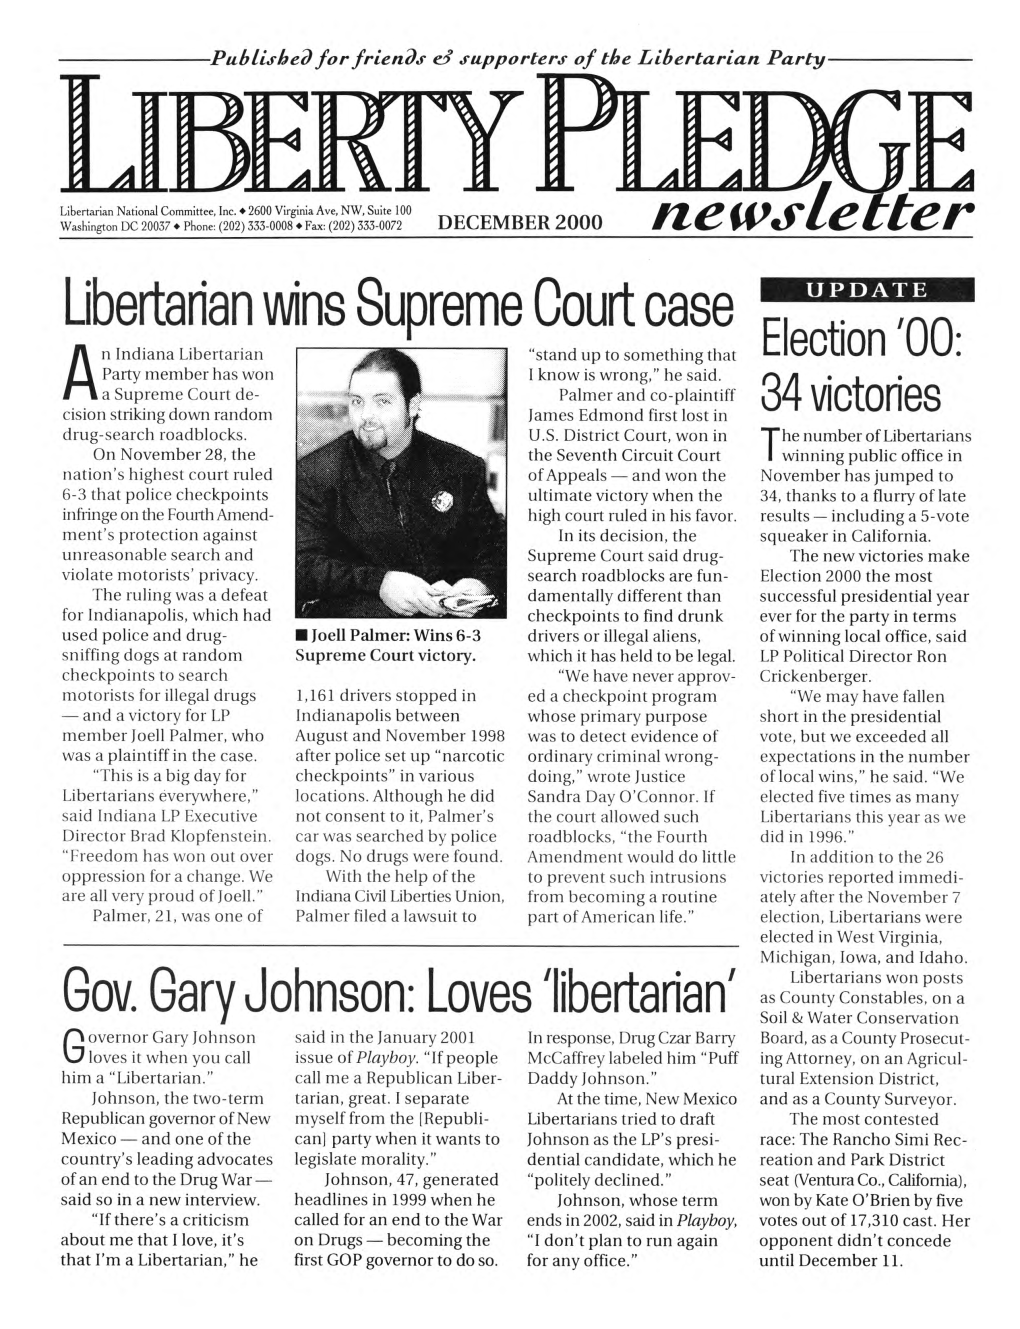 Libertarian Wins Supreme Court Case a Gov. Gary Johnson